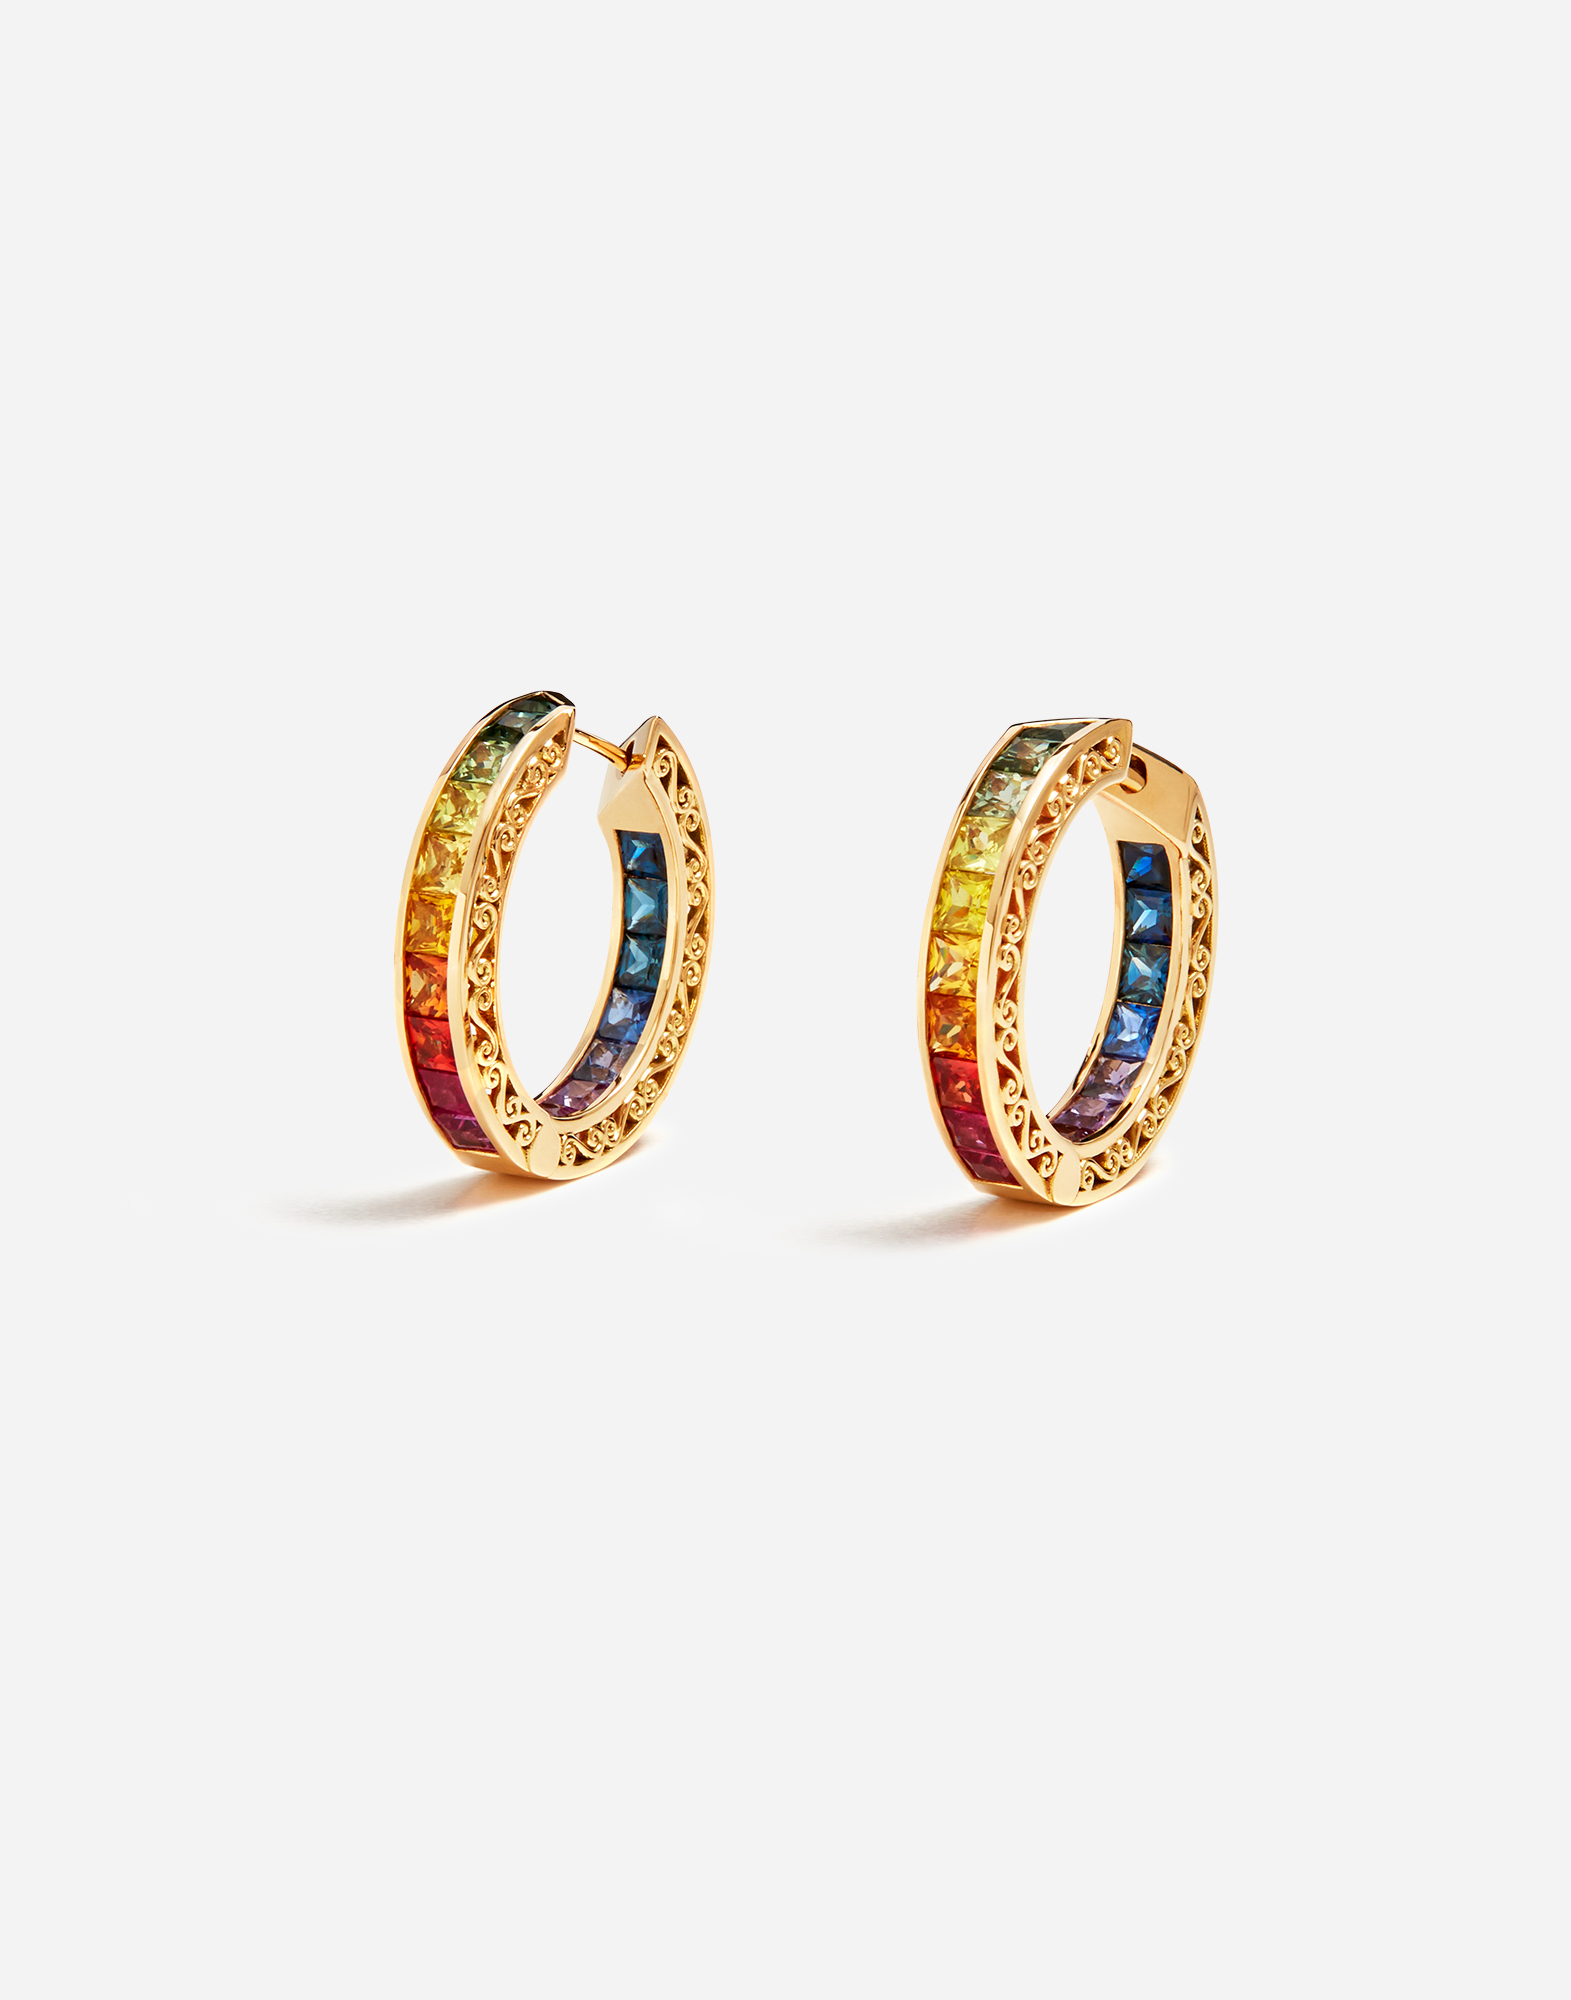 Multi-colored sapphire hoop earrings in Gold